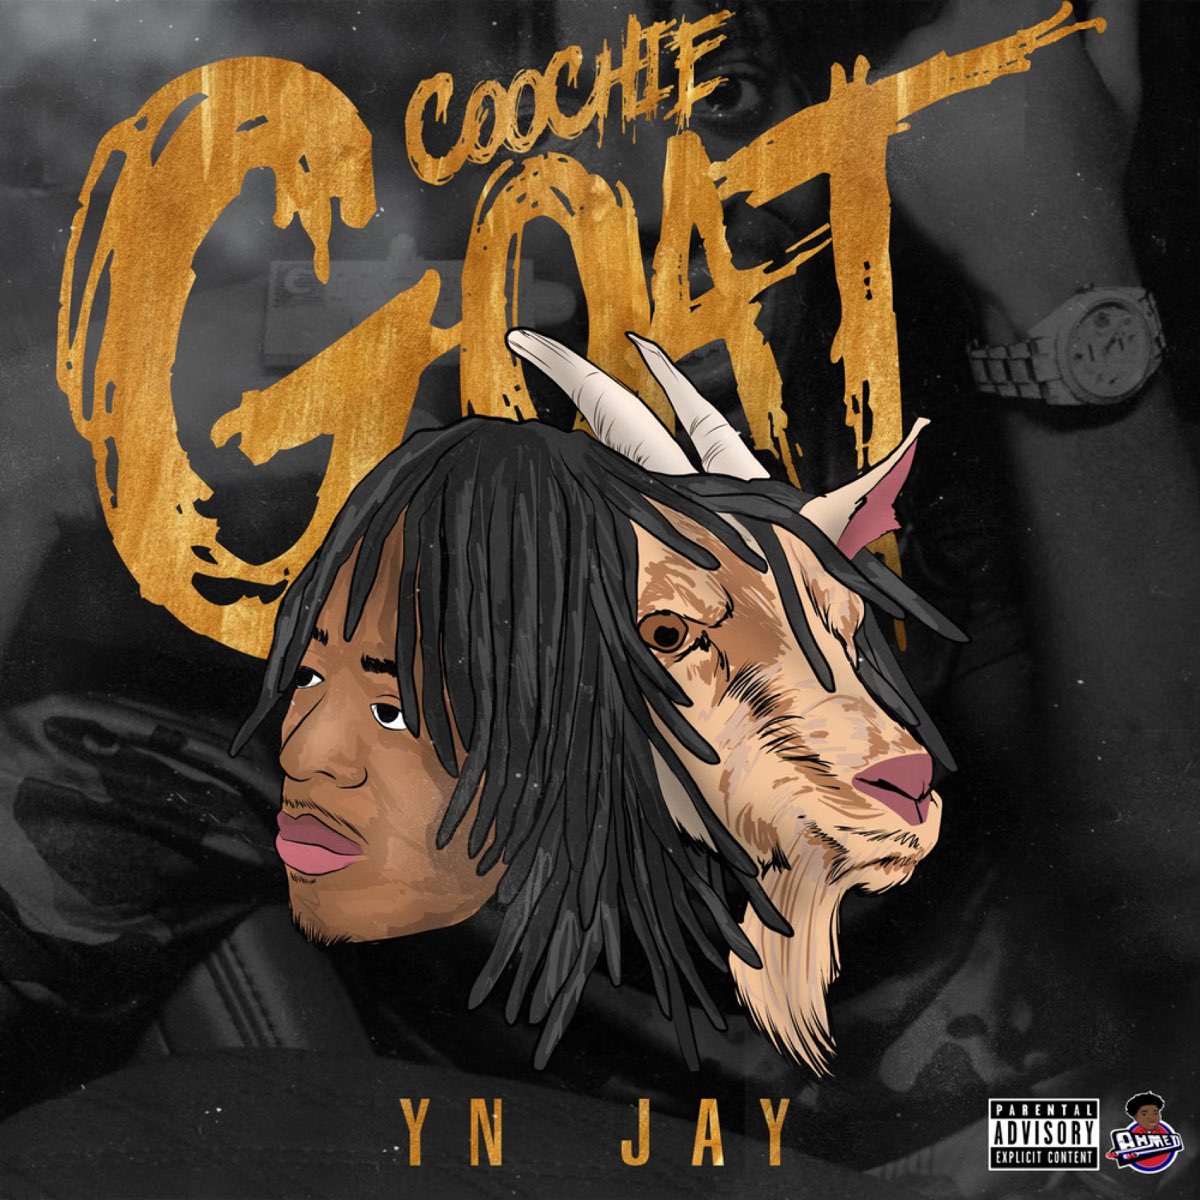 YN Jay Coochie Goat cover artwork